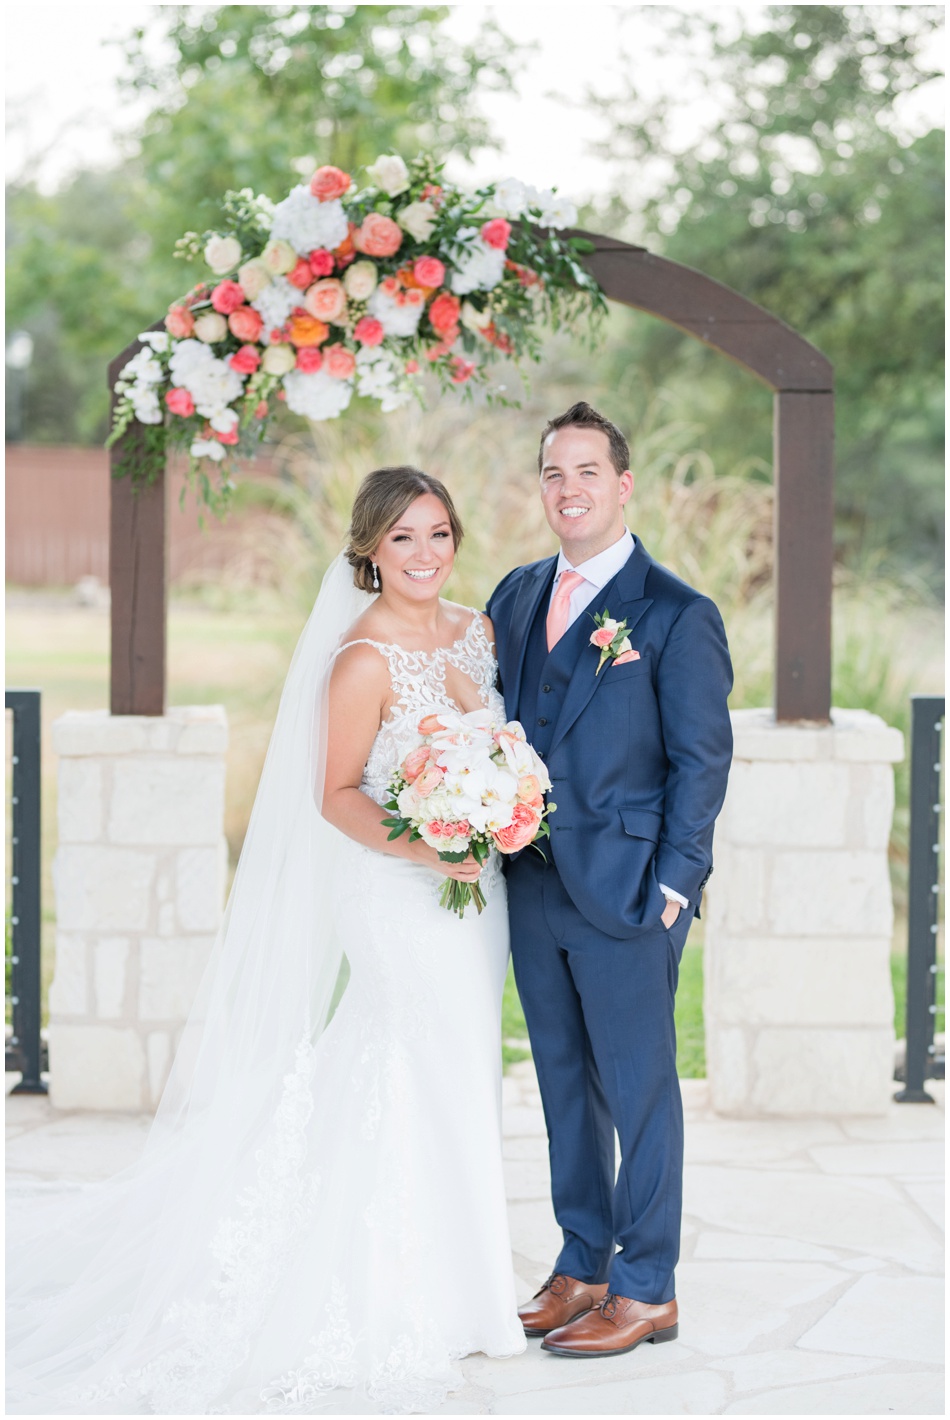 The Milestone Wedding Venue in Georgetown Texas